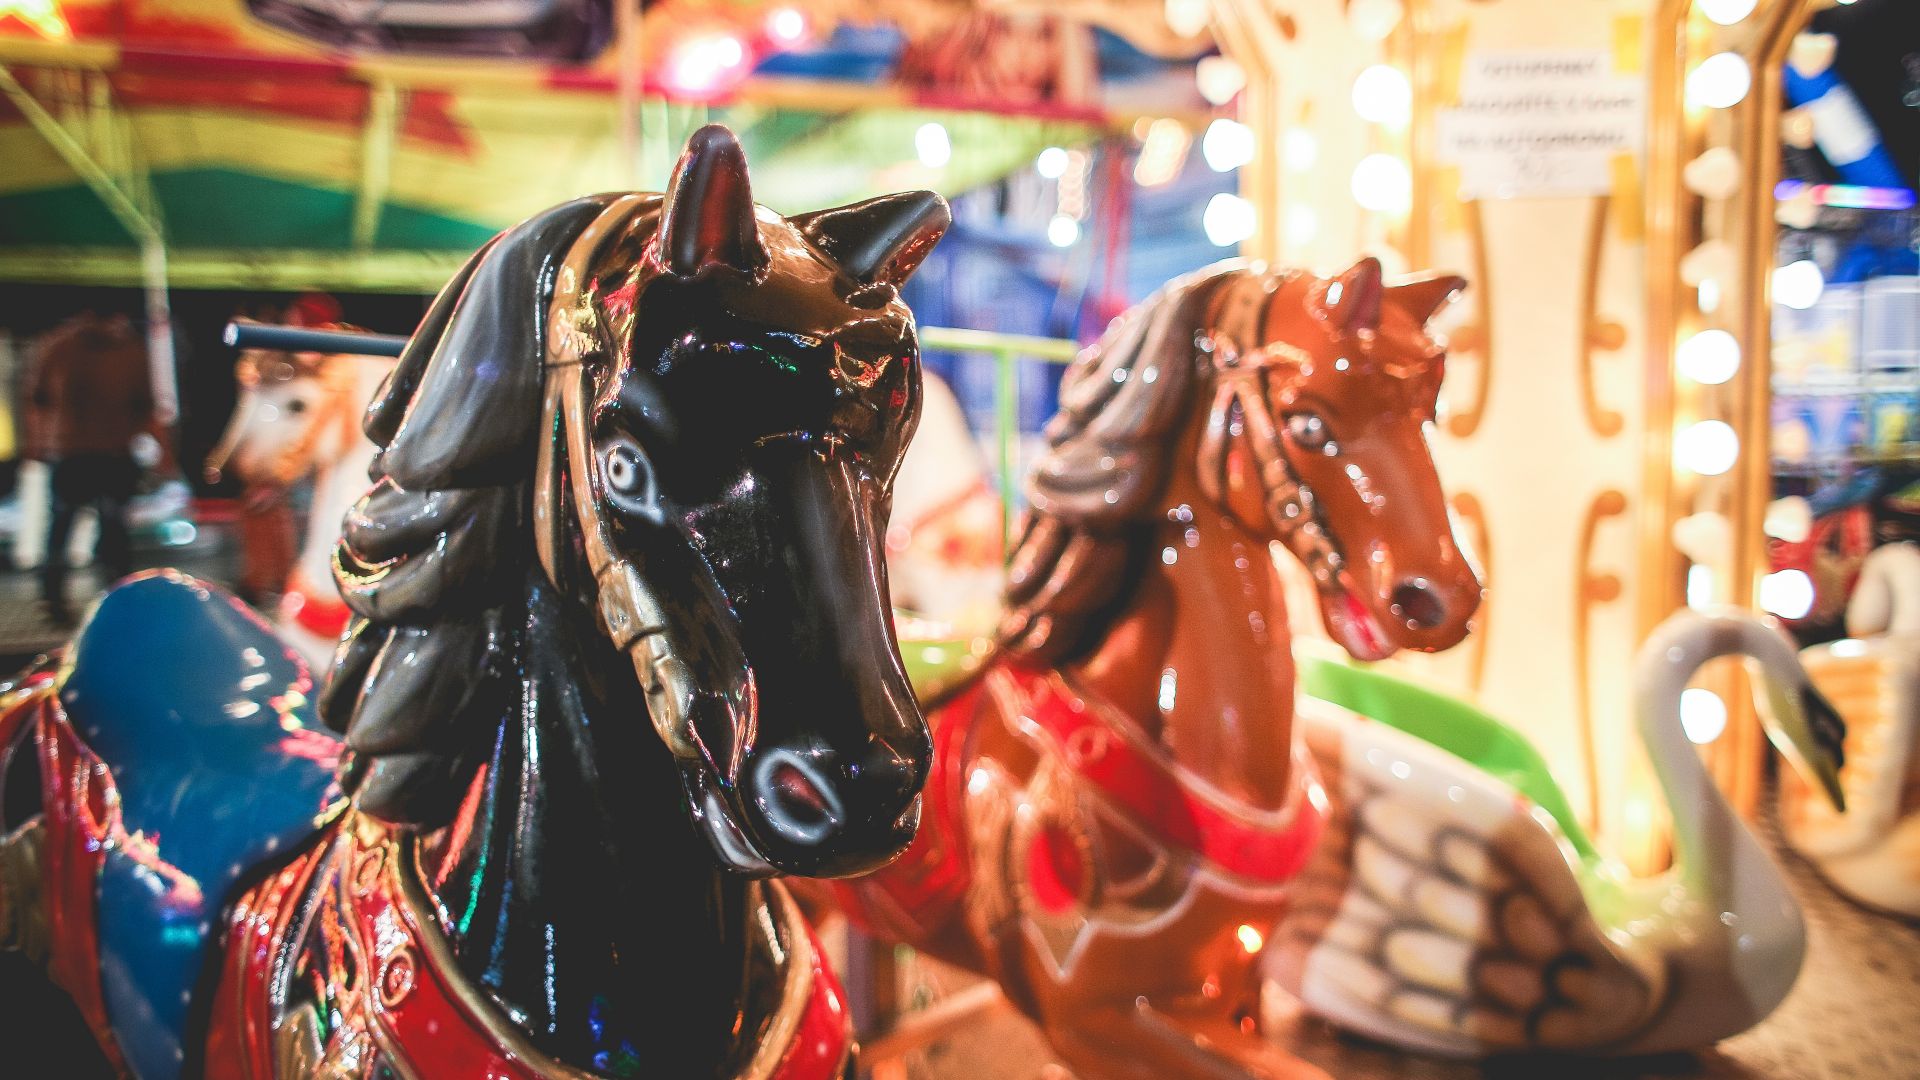 Wallpaper Carousel horse amusement park